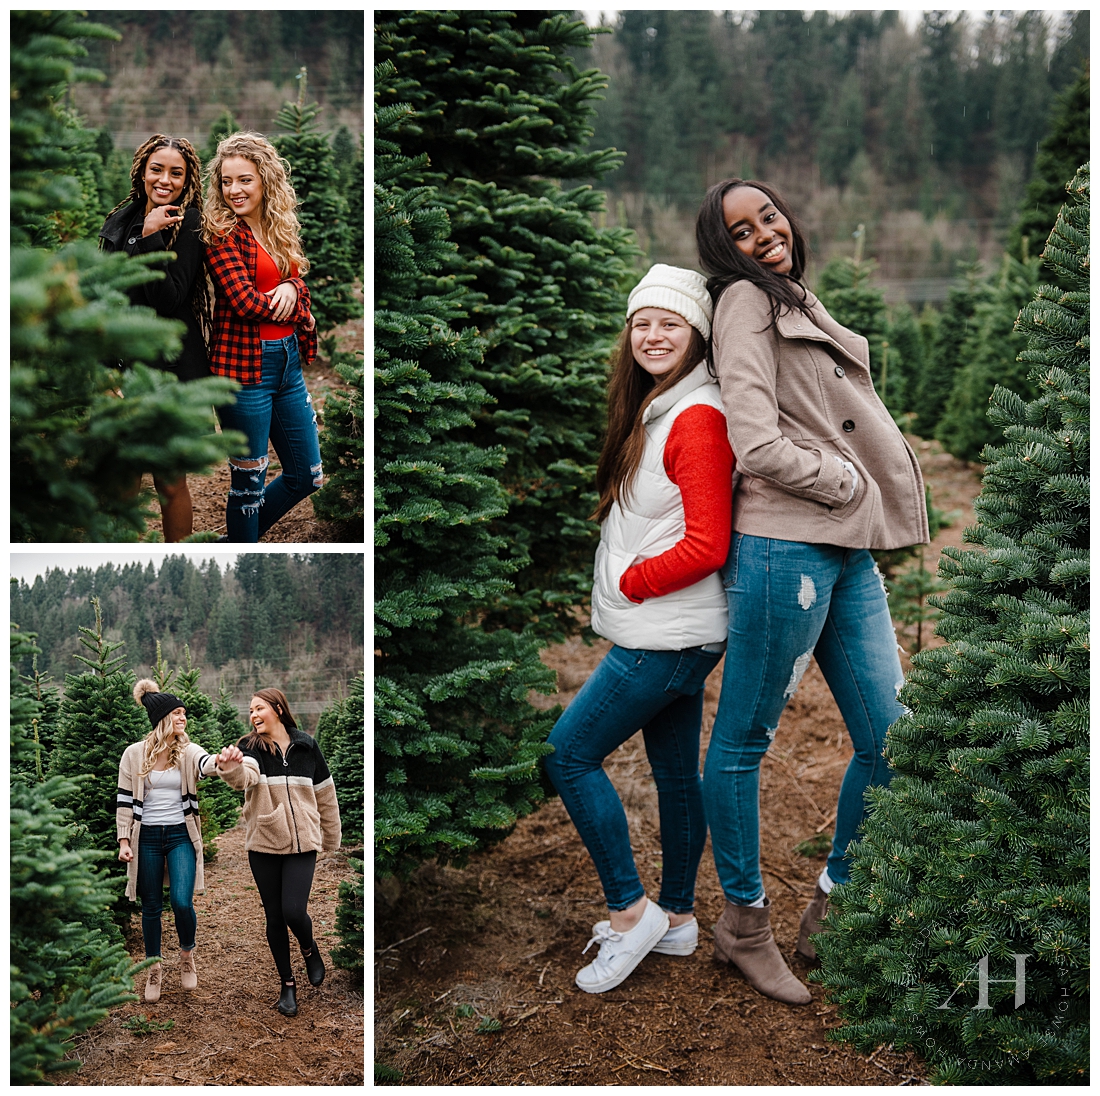 Pose Ideas and Holiday Themed Portrait Session Photographed by Tacoma Senior Photographer Amanda Howse